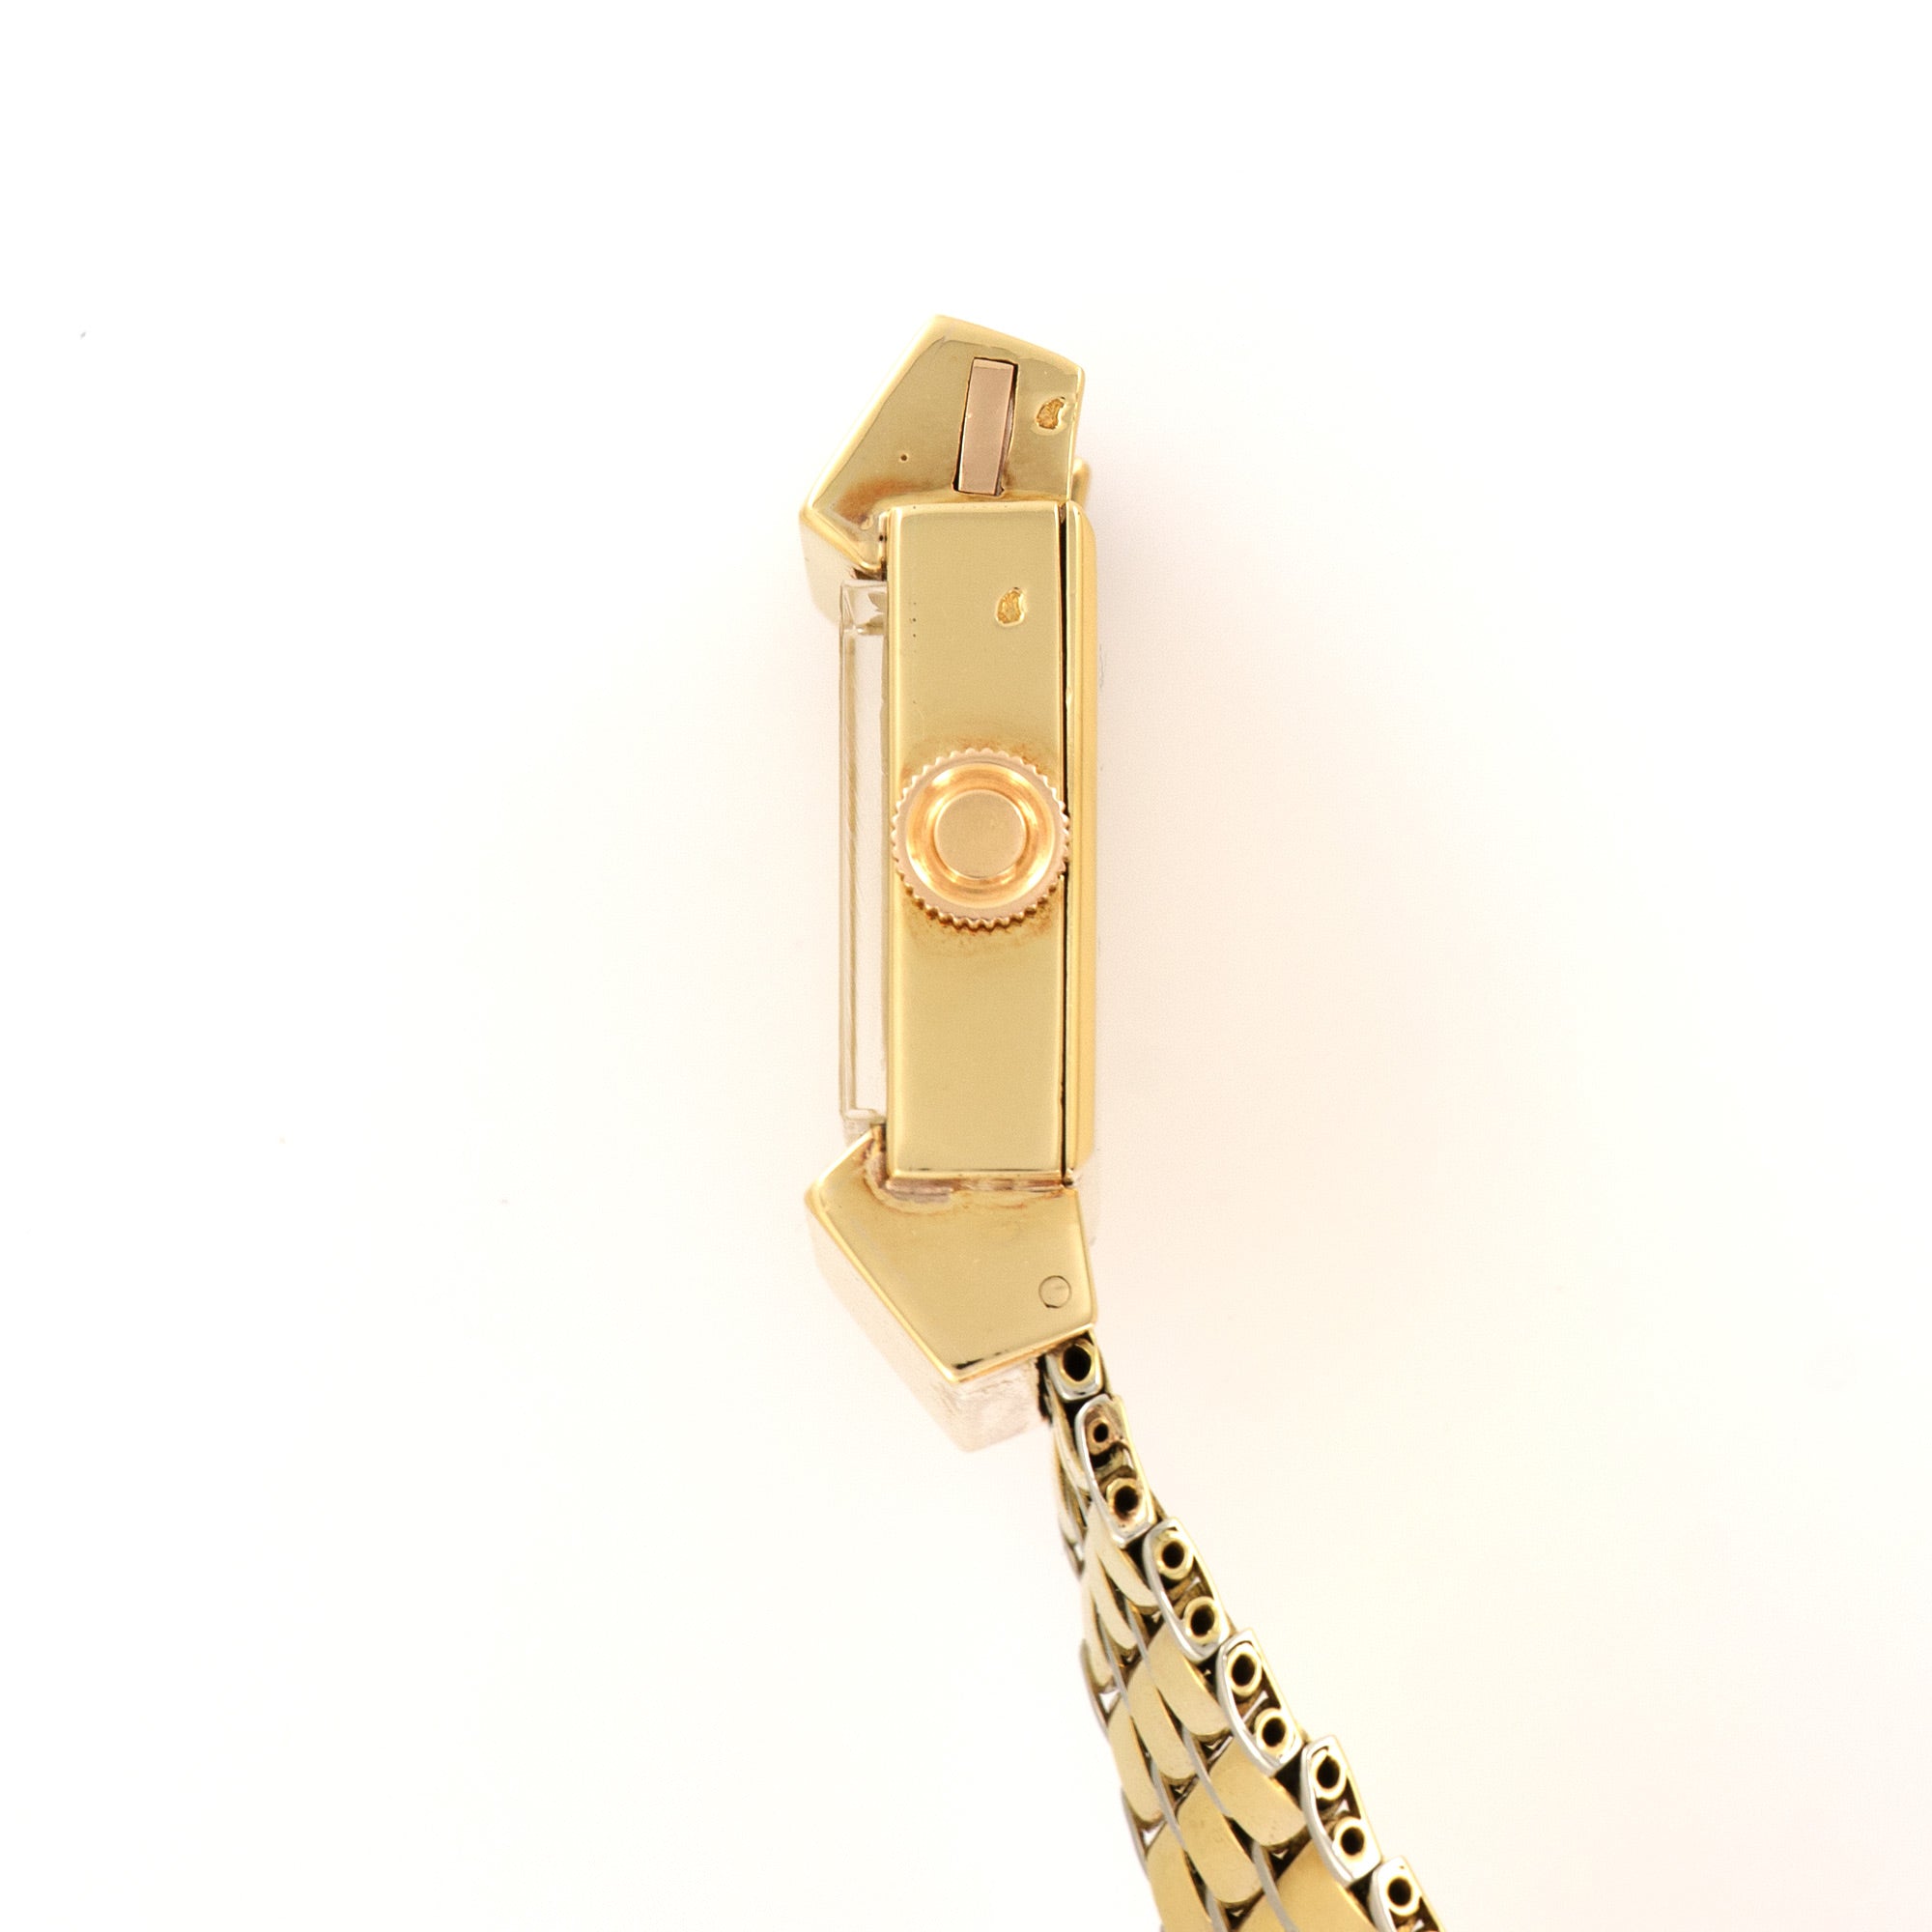 Vacheron Constantin - Vacheron Constantin Yellow Gold Bracelet Watch - The Keystone Watches